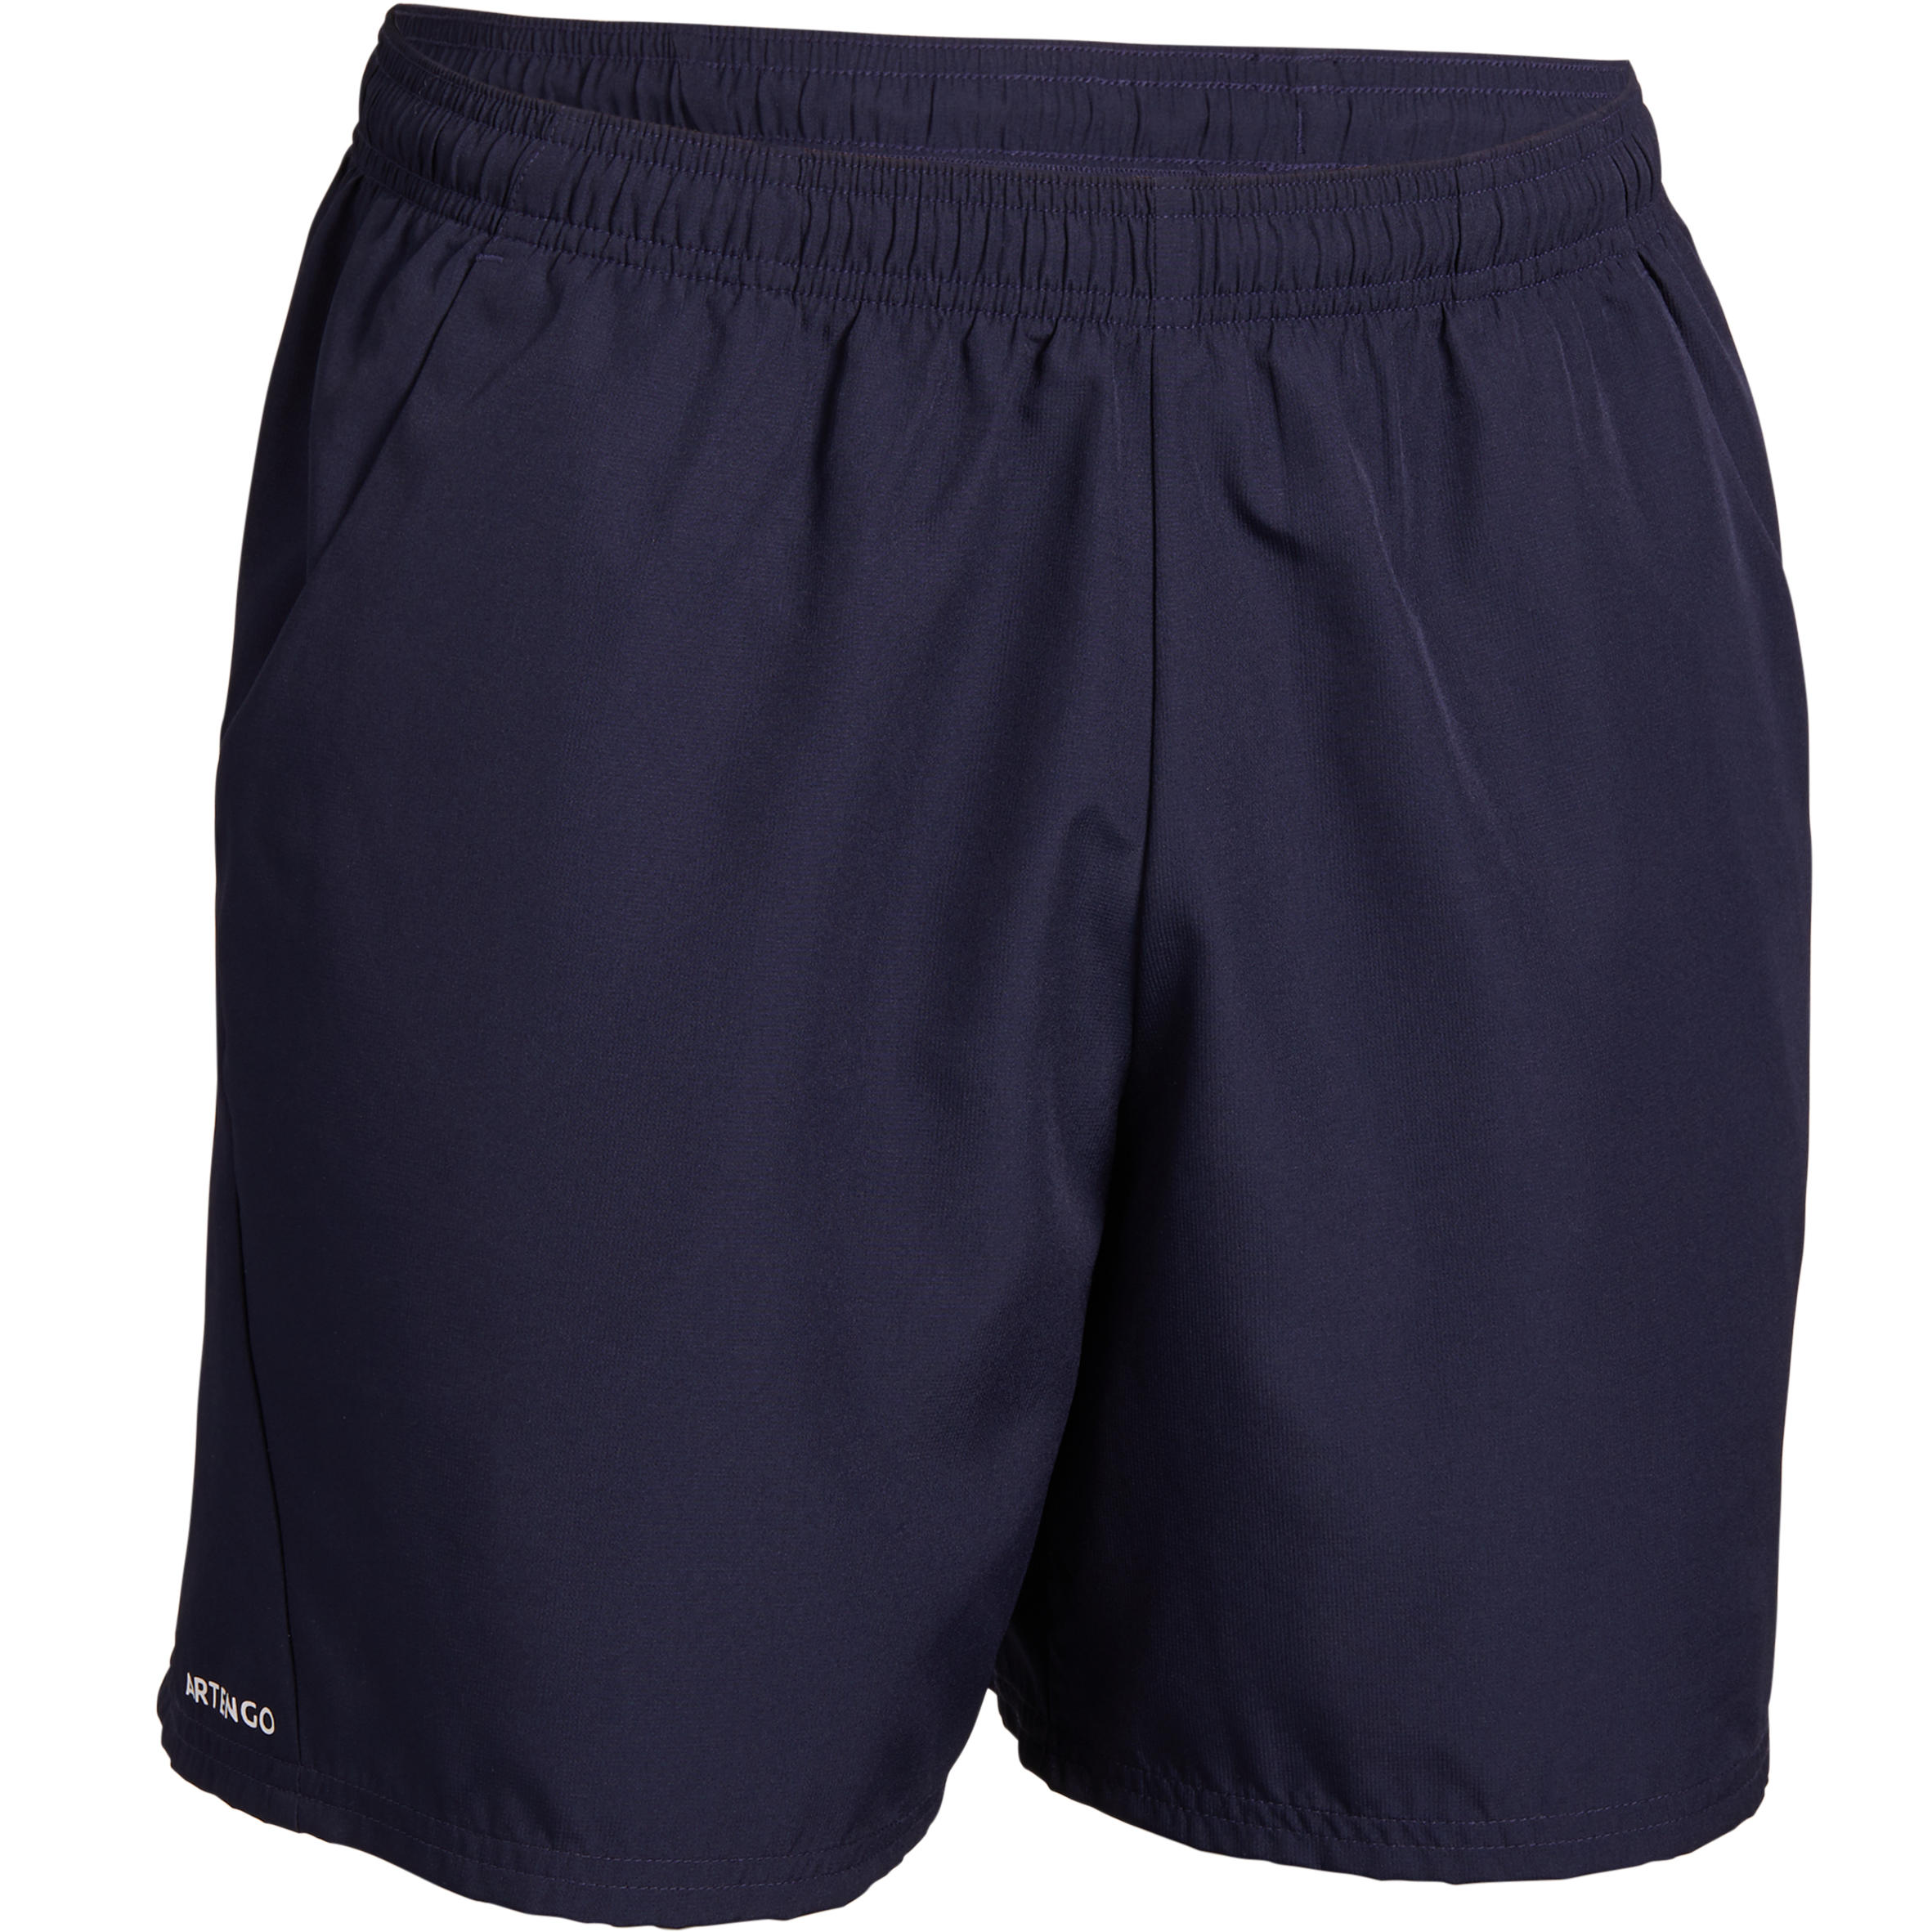 Men's Shorts - Buy Shorts for Men 